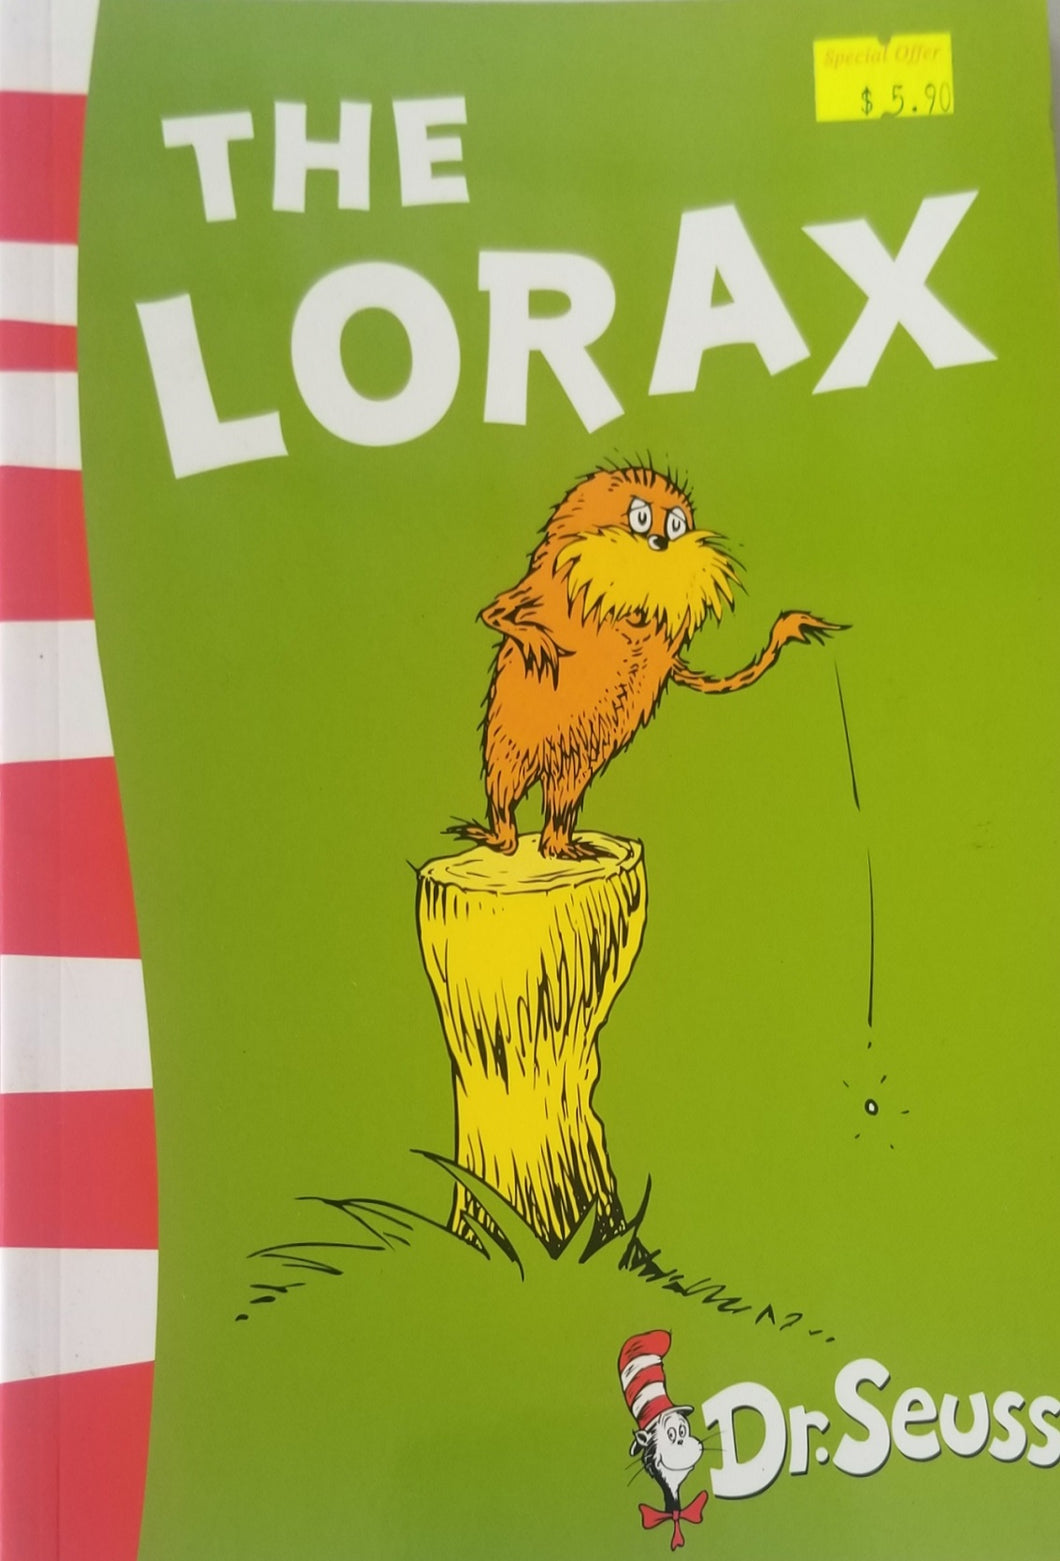 The Lorax - Dr. Seuss